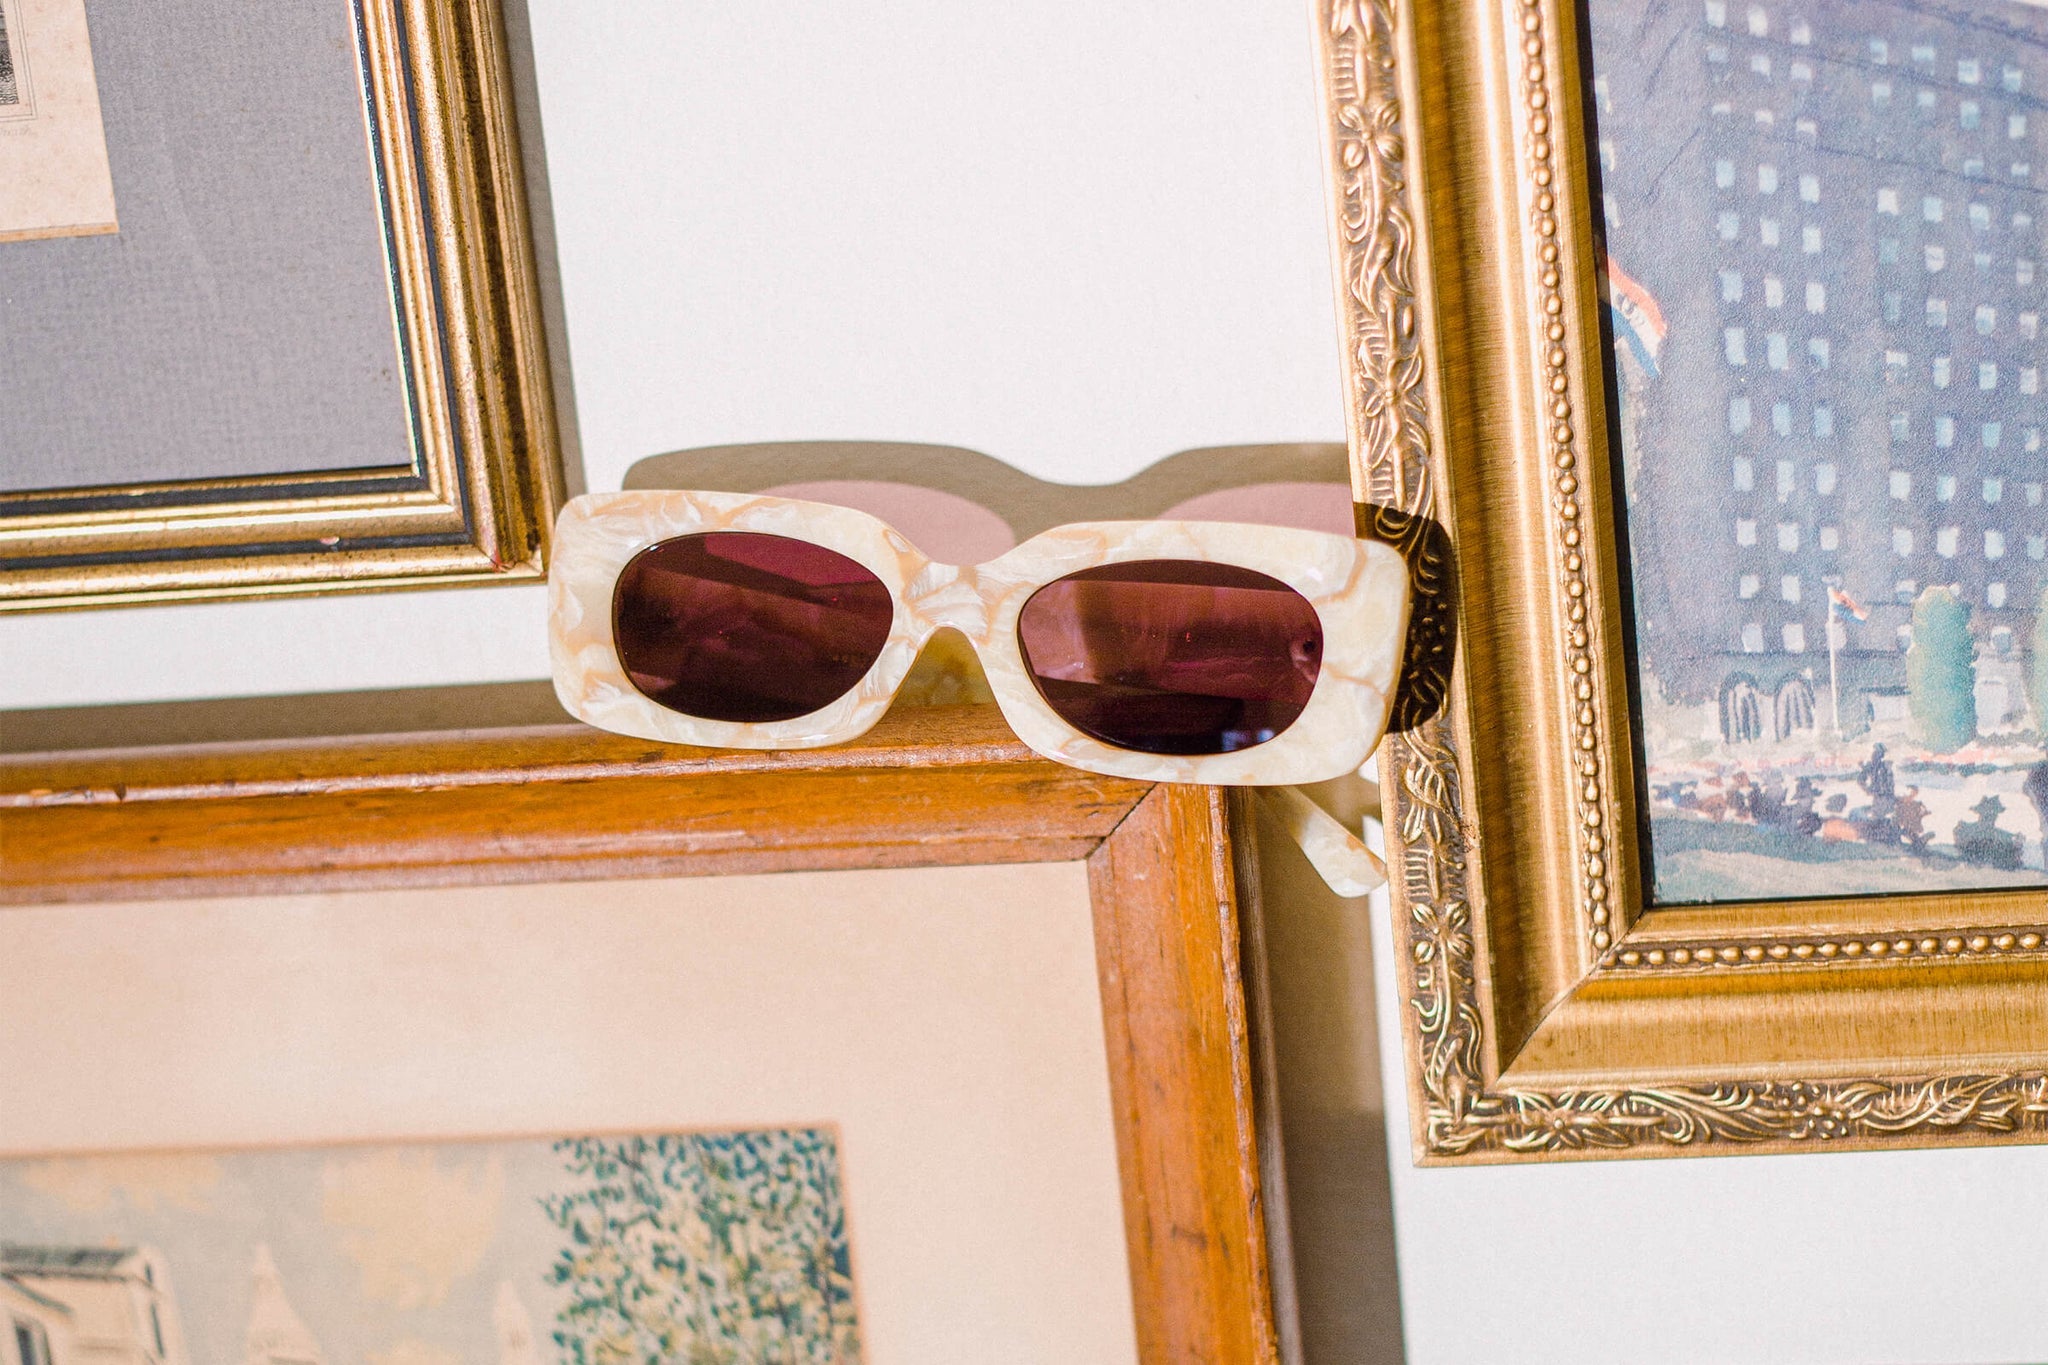 The Supa Phreek - Cream Marble Sunglasses from Crap Eyewear